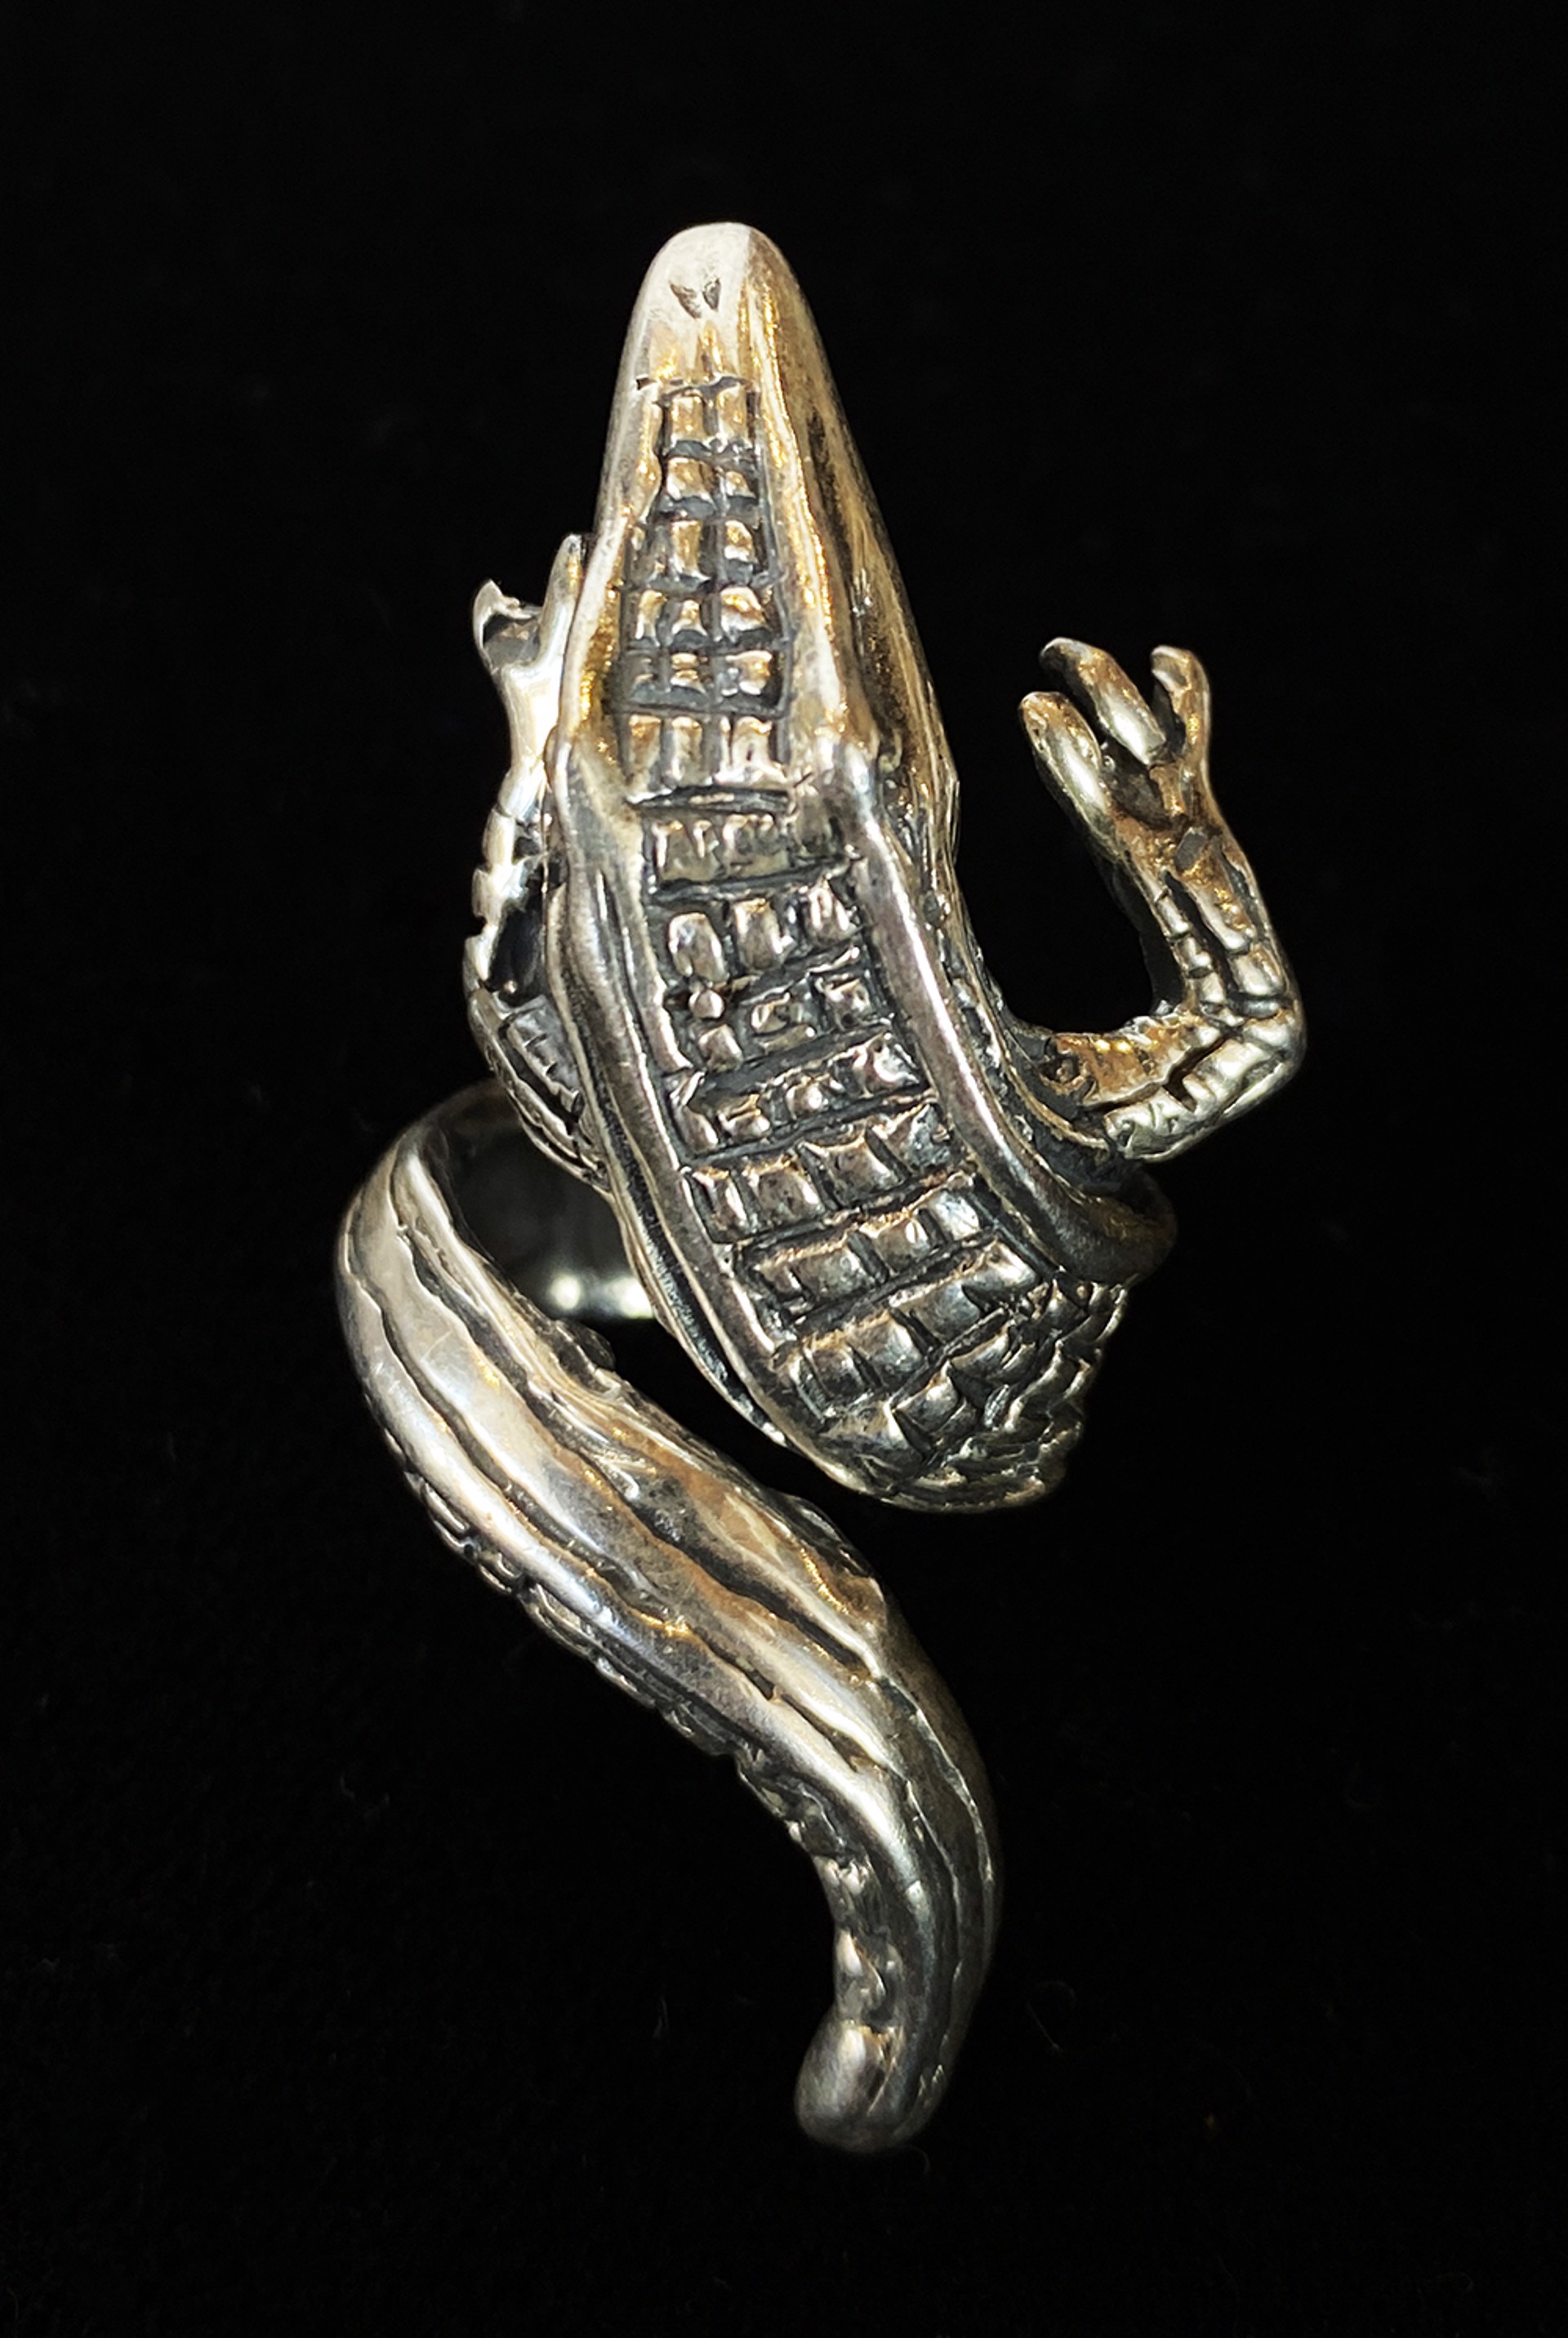 Aligator Ring by Artist Unknown